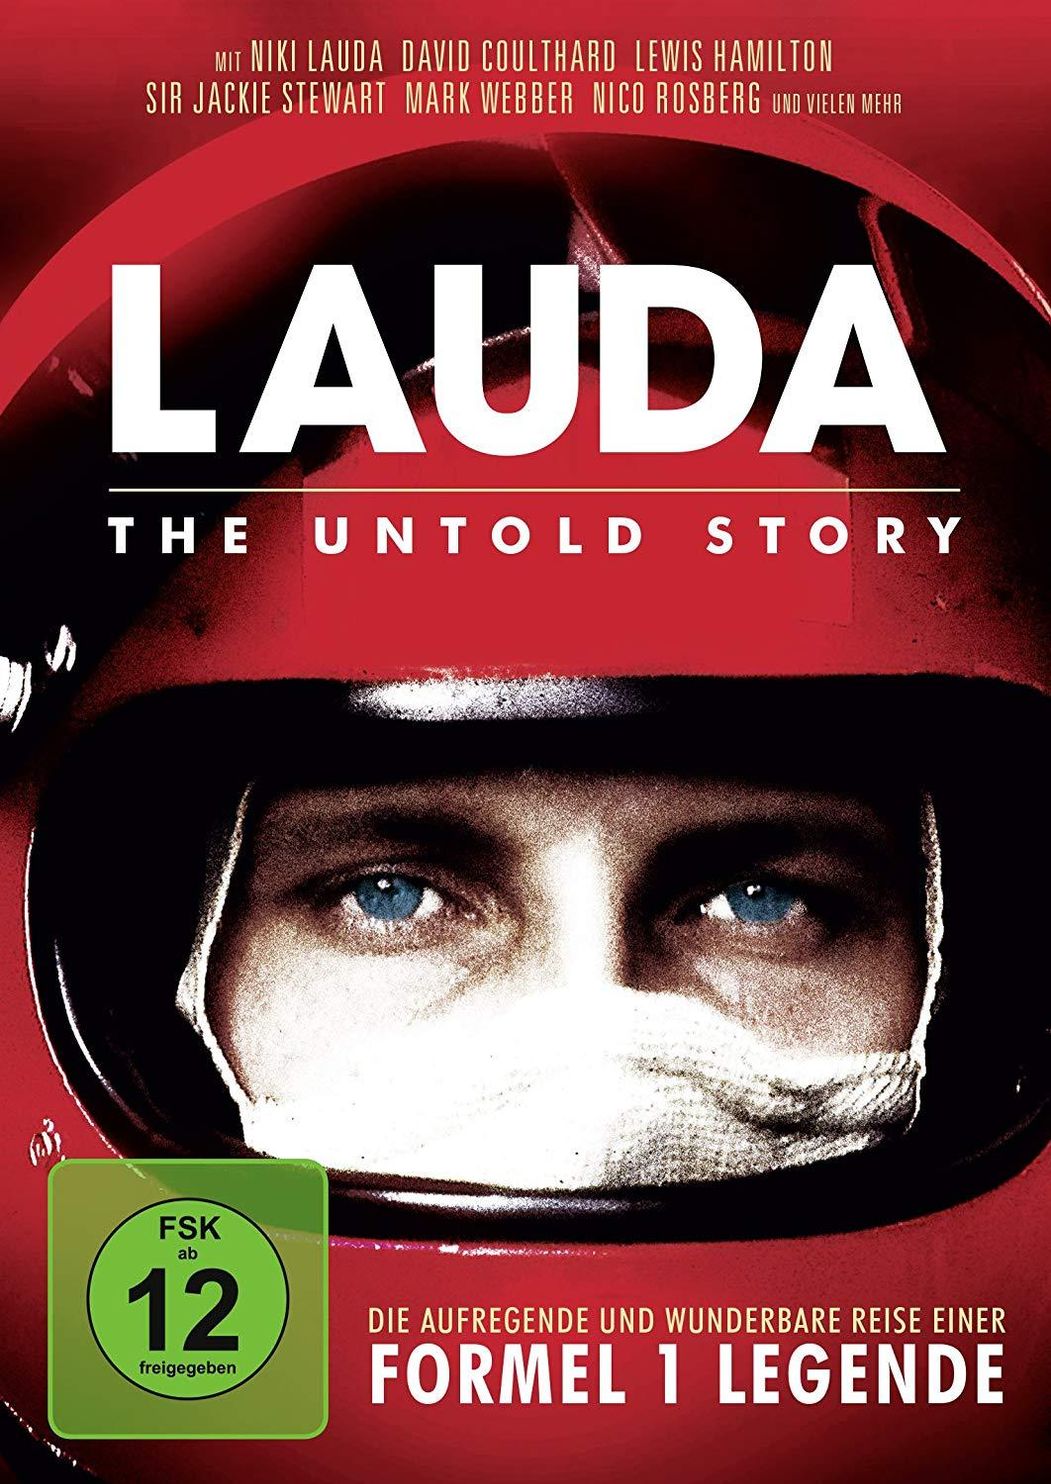 Lauda: The Untold Story DVD bei Weltbild.at bestellen